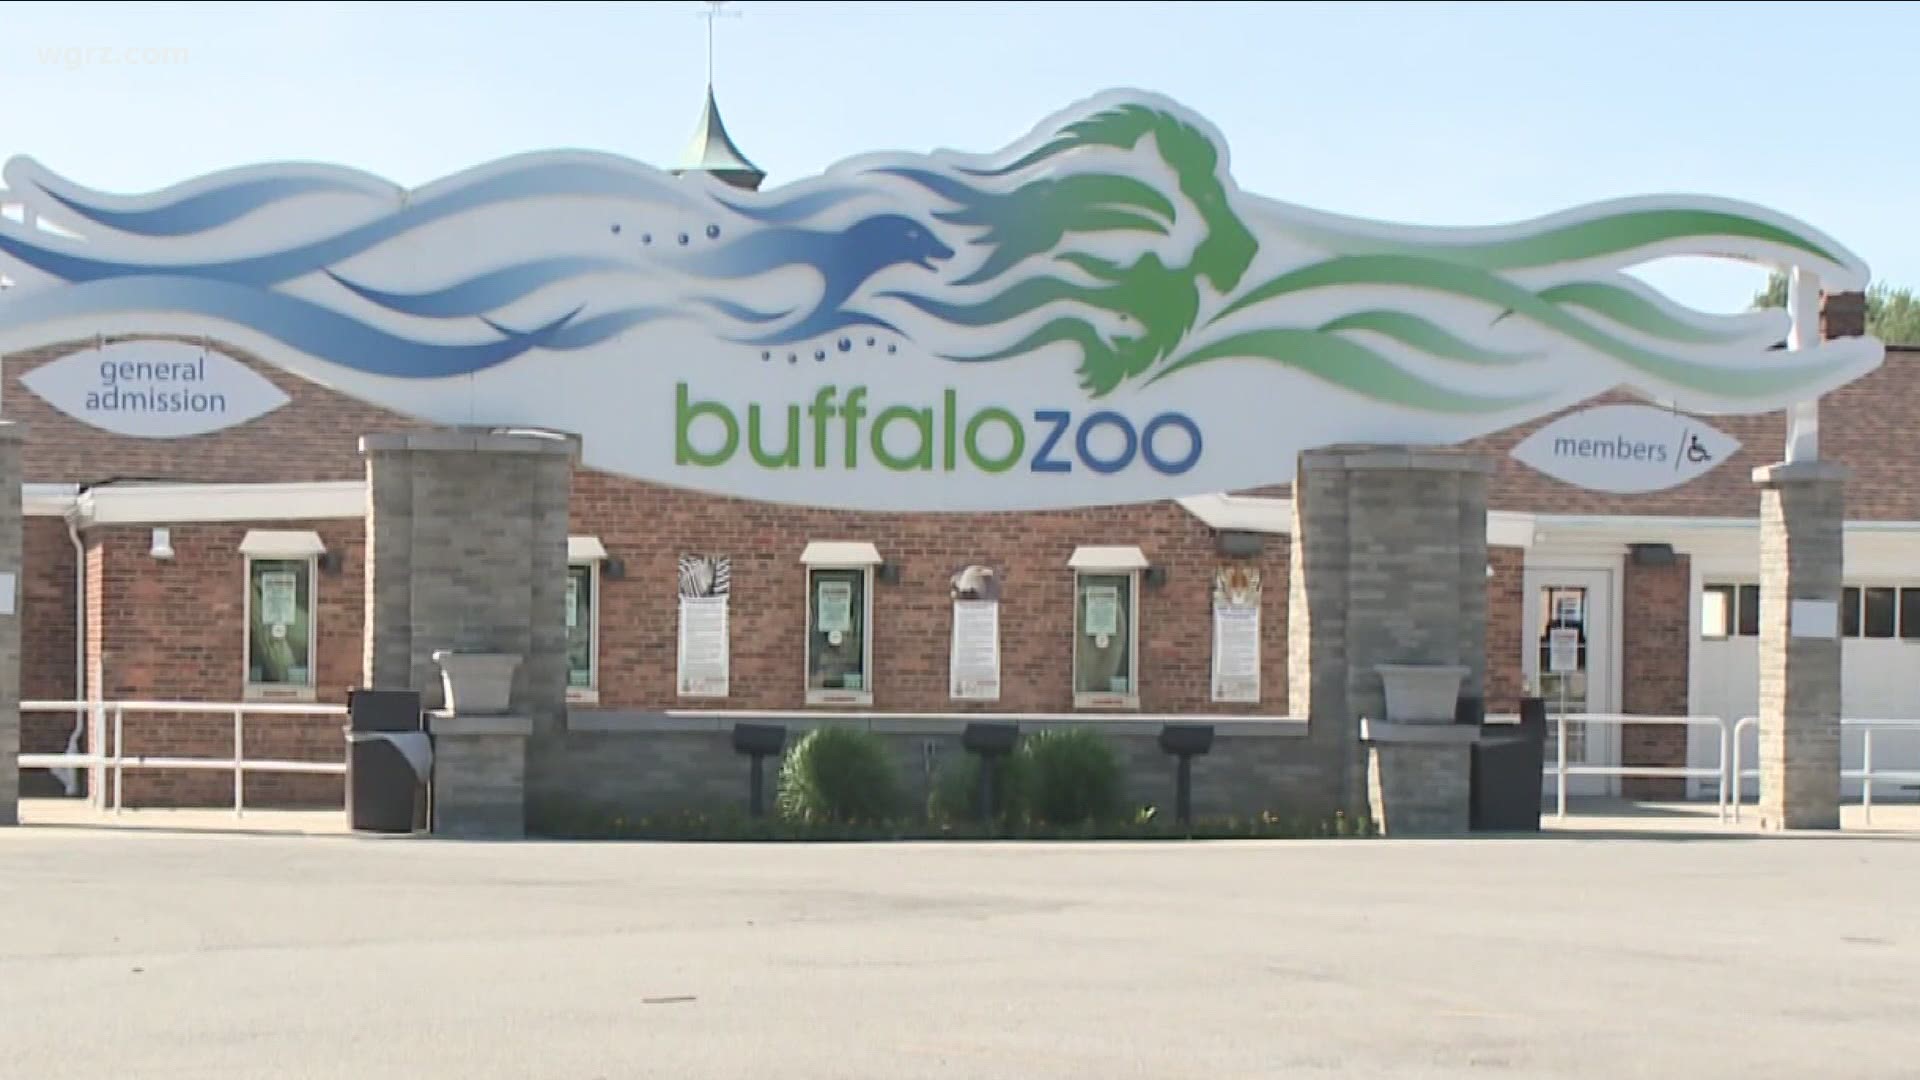 Buffalo Zoo opening 7 days starting March 29